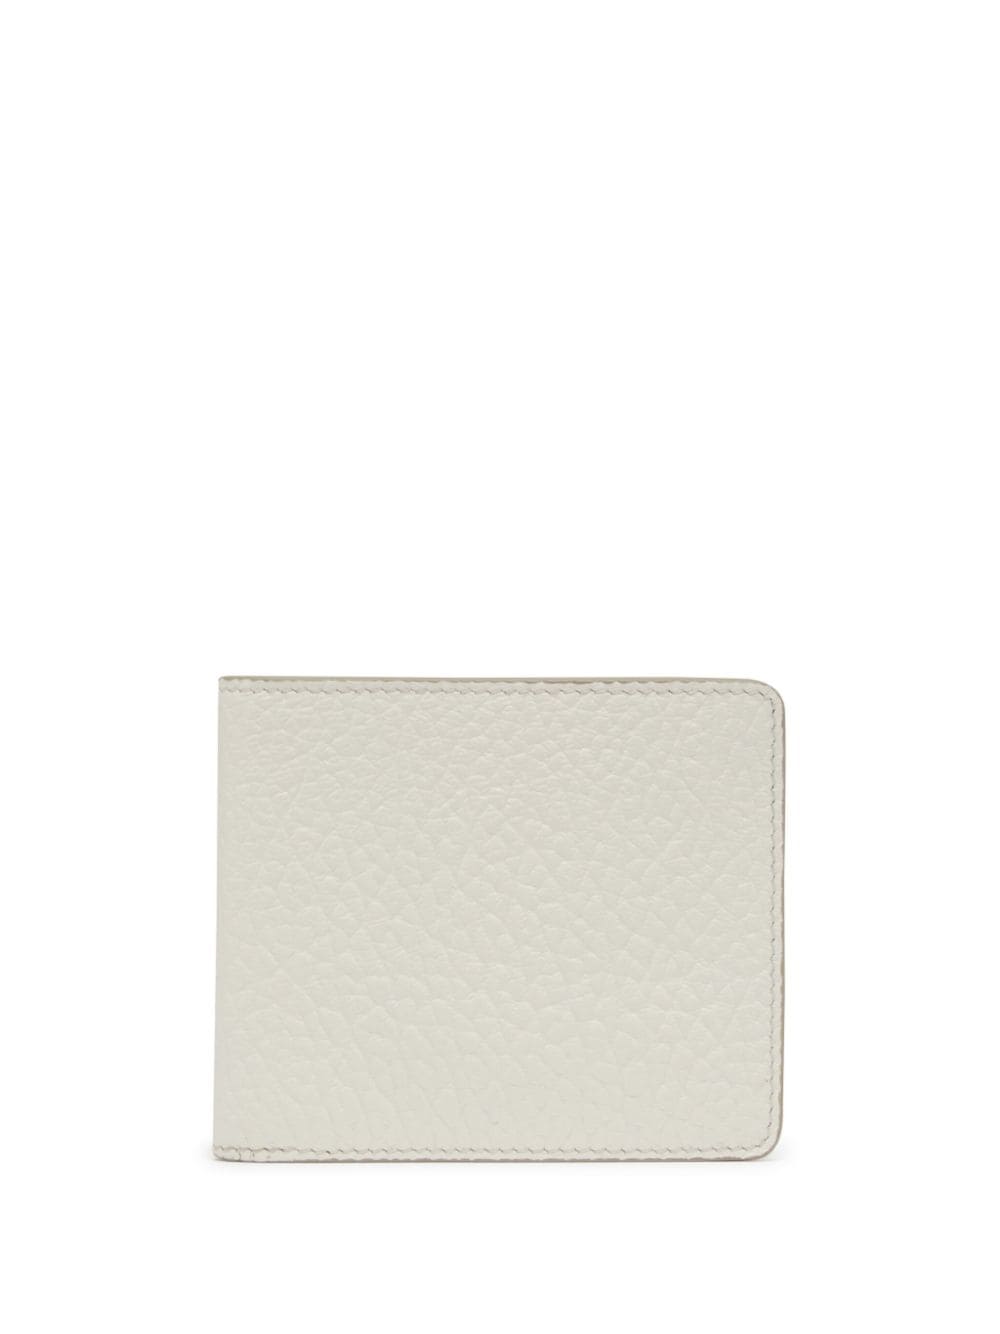 Maison Margiela four-stitch leather card holder - White von Maison Margiela